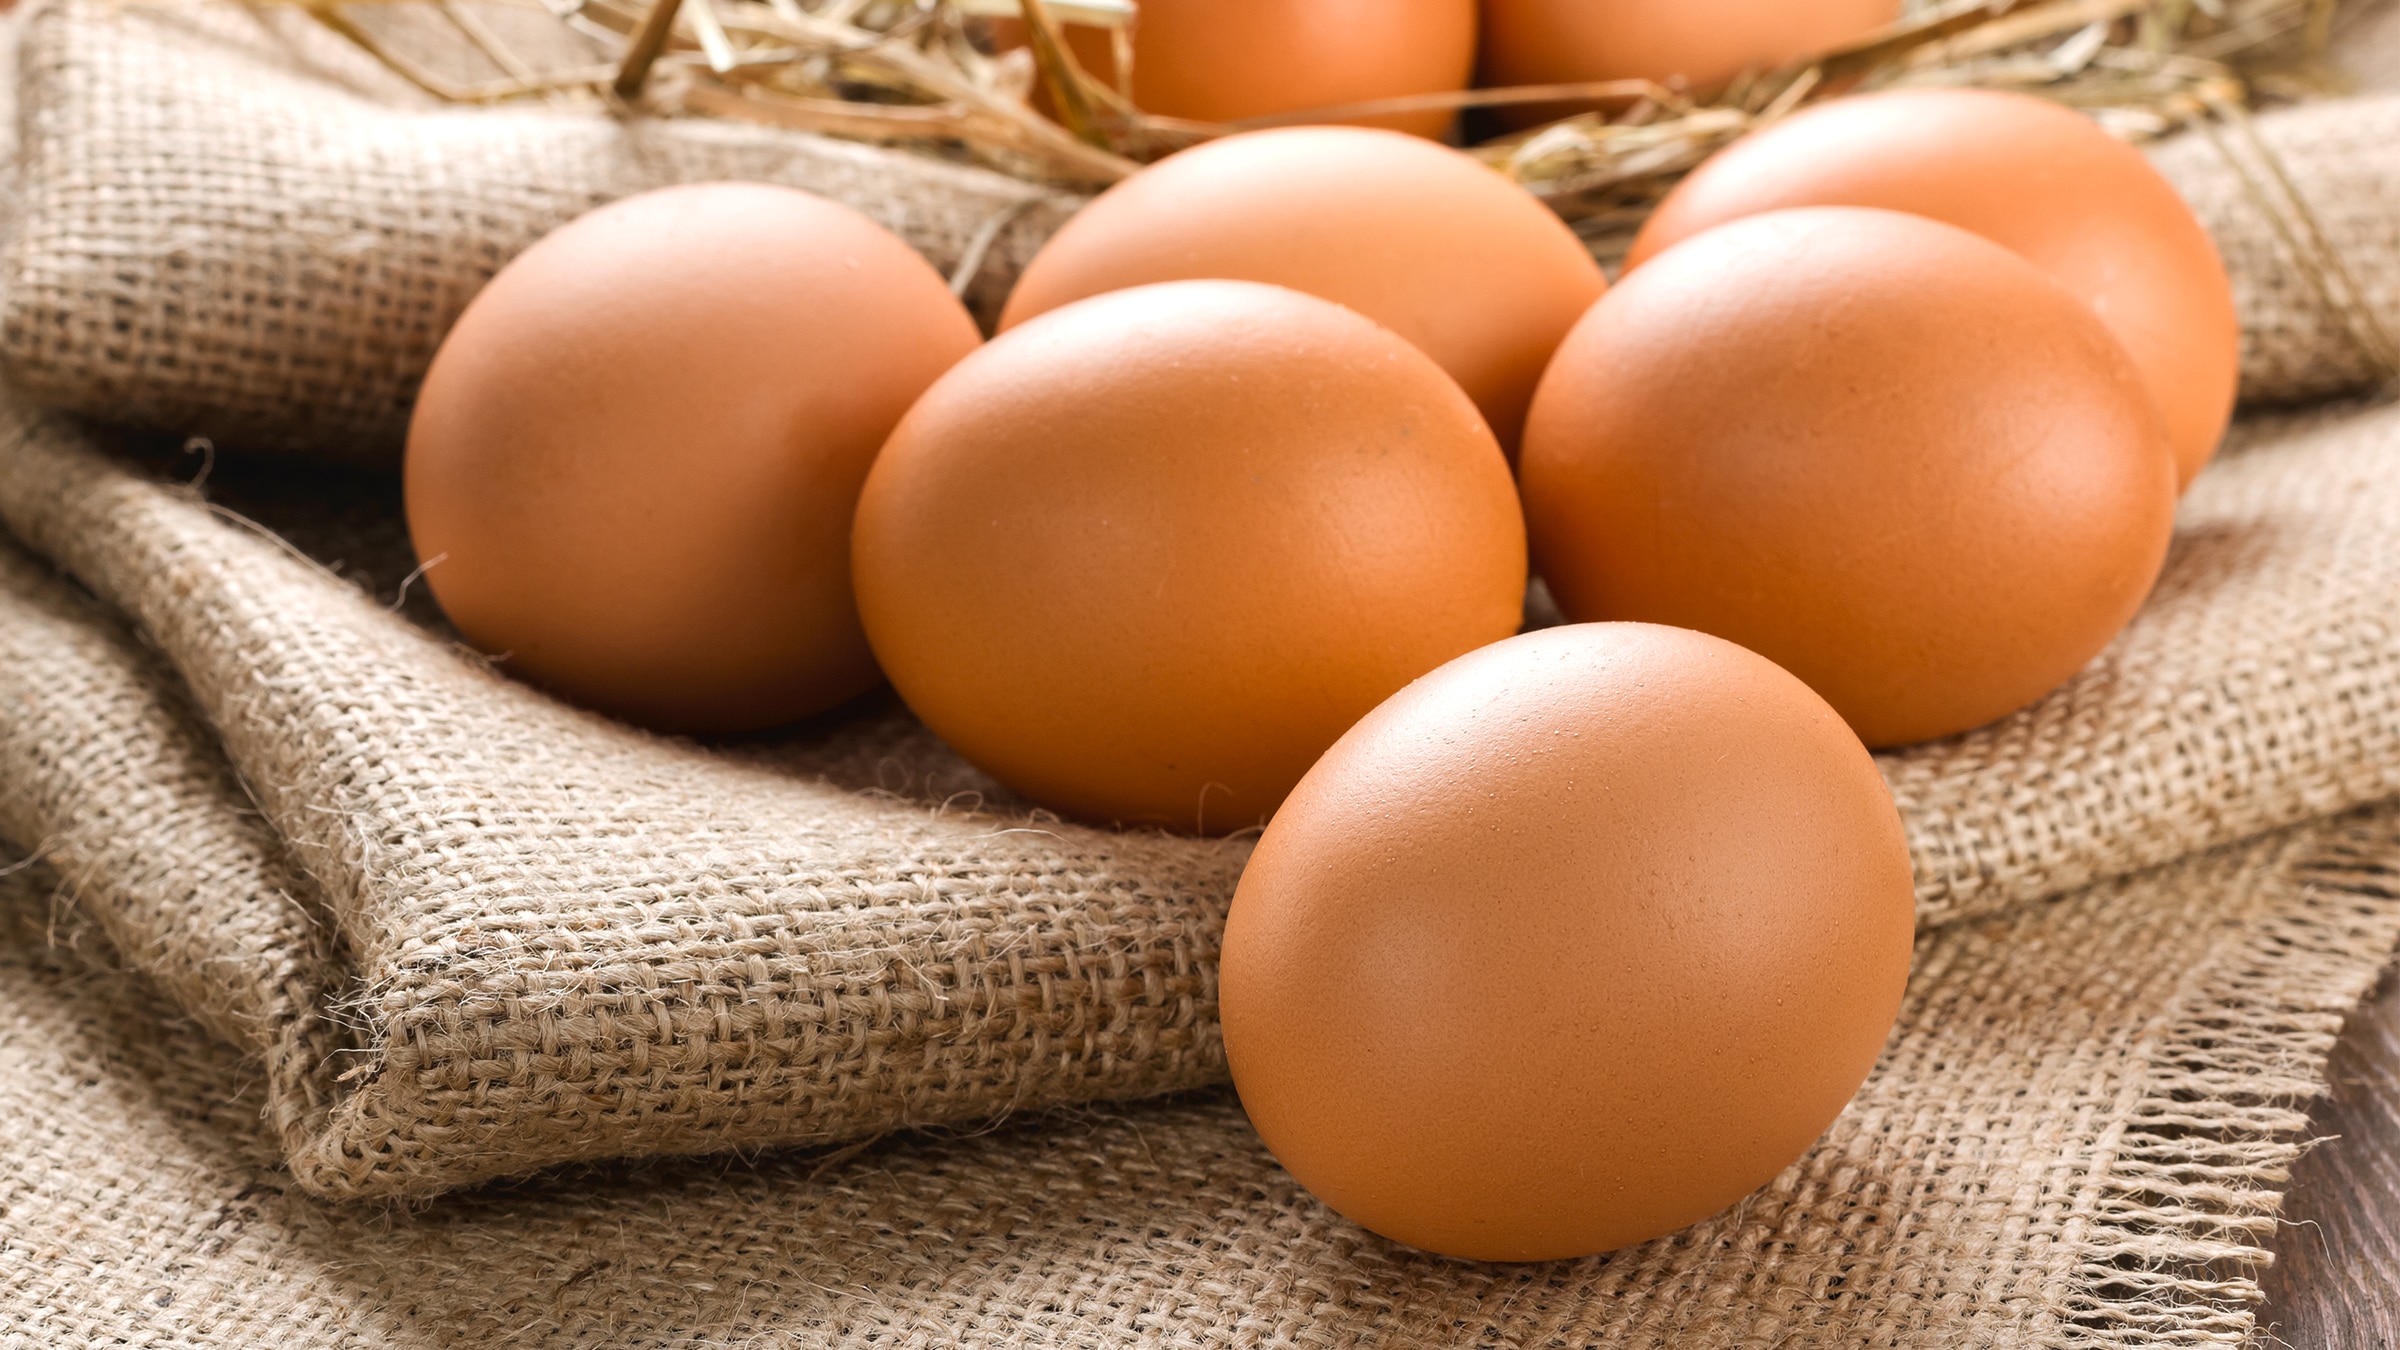 Status of free range eggs